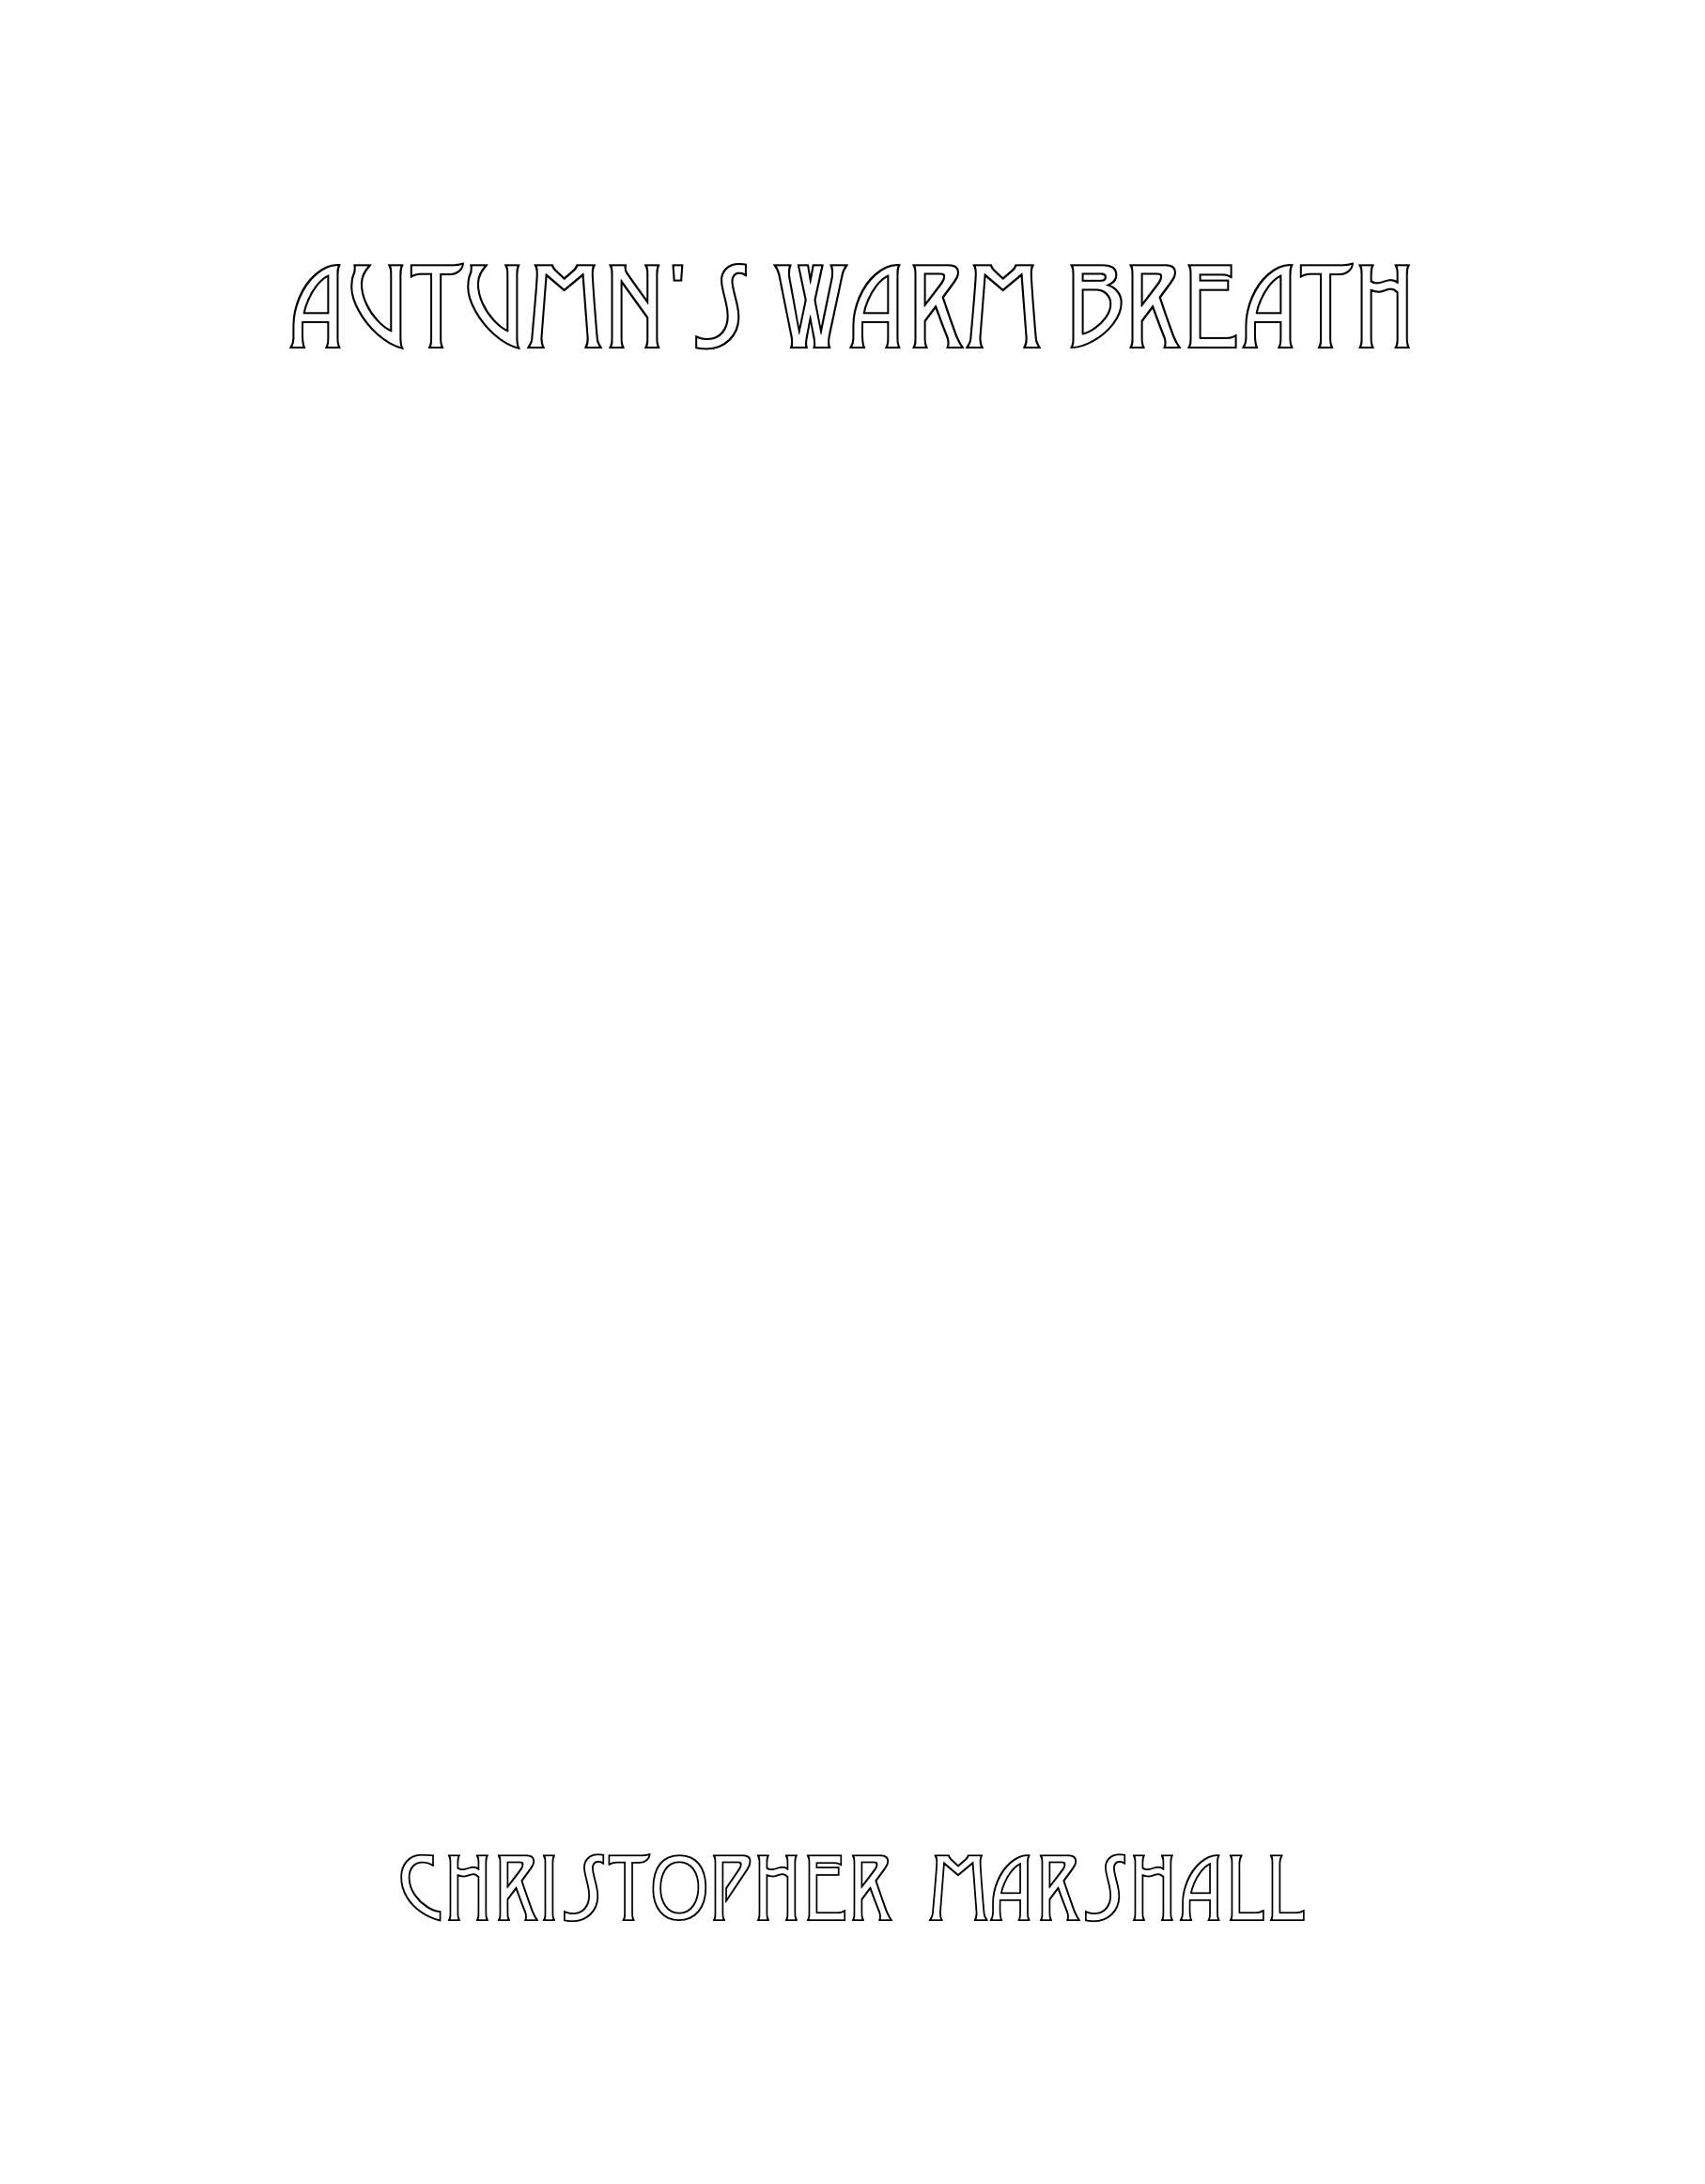 Autumn's Warm Breath by Christopher Marshall 